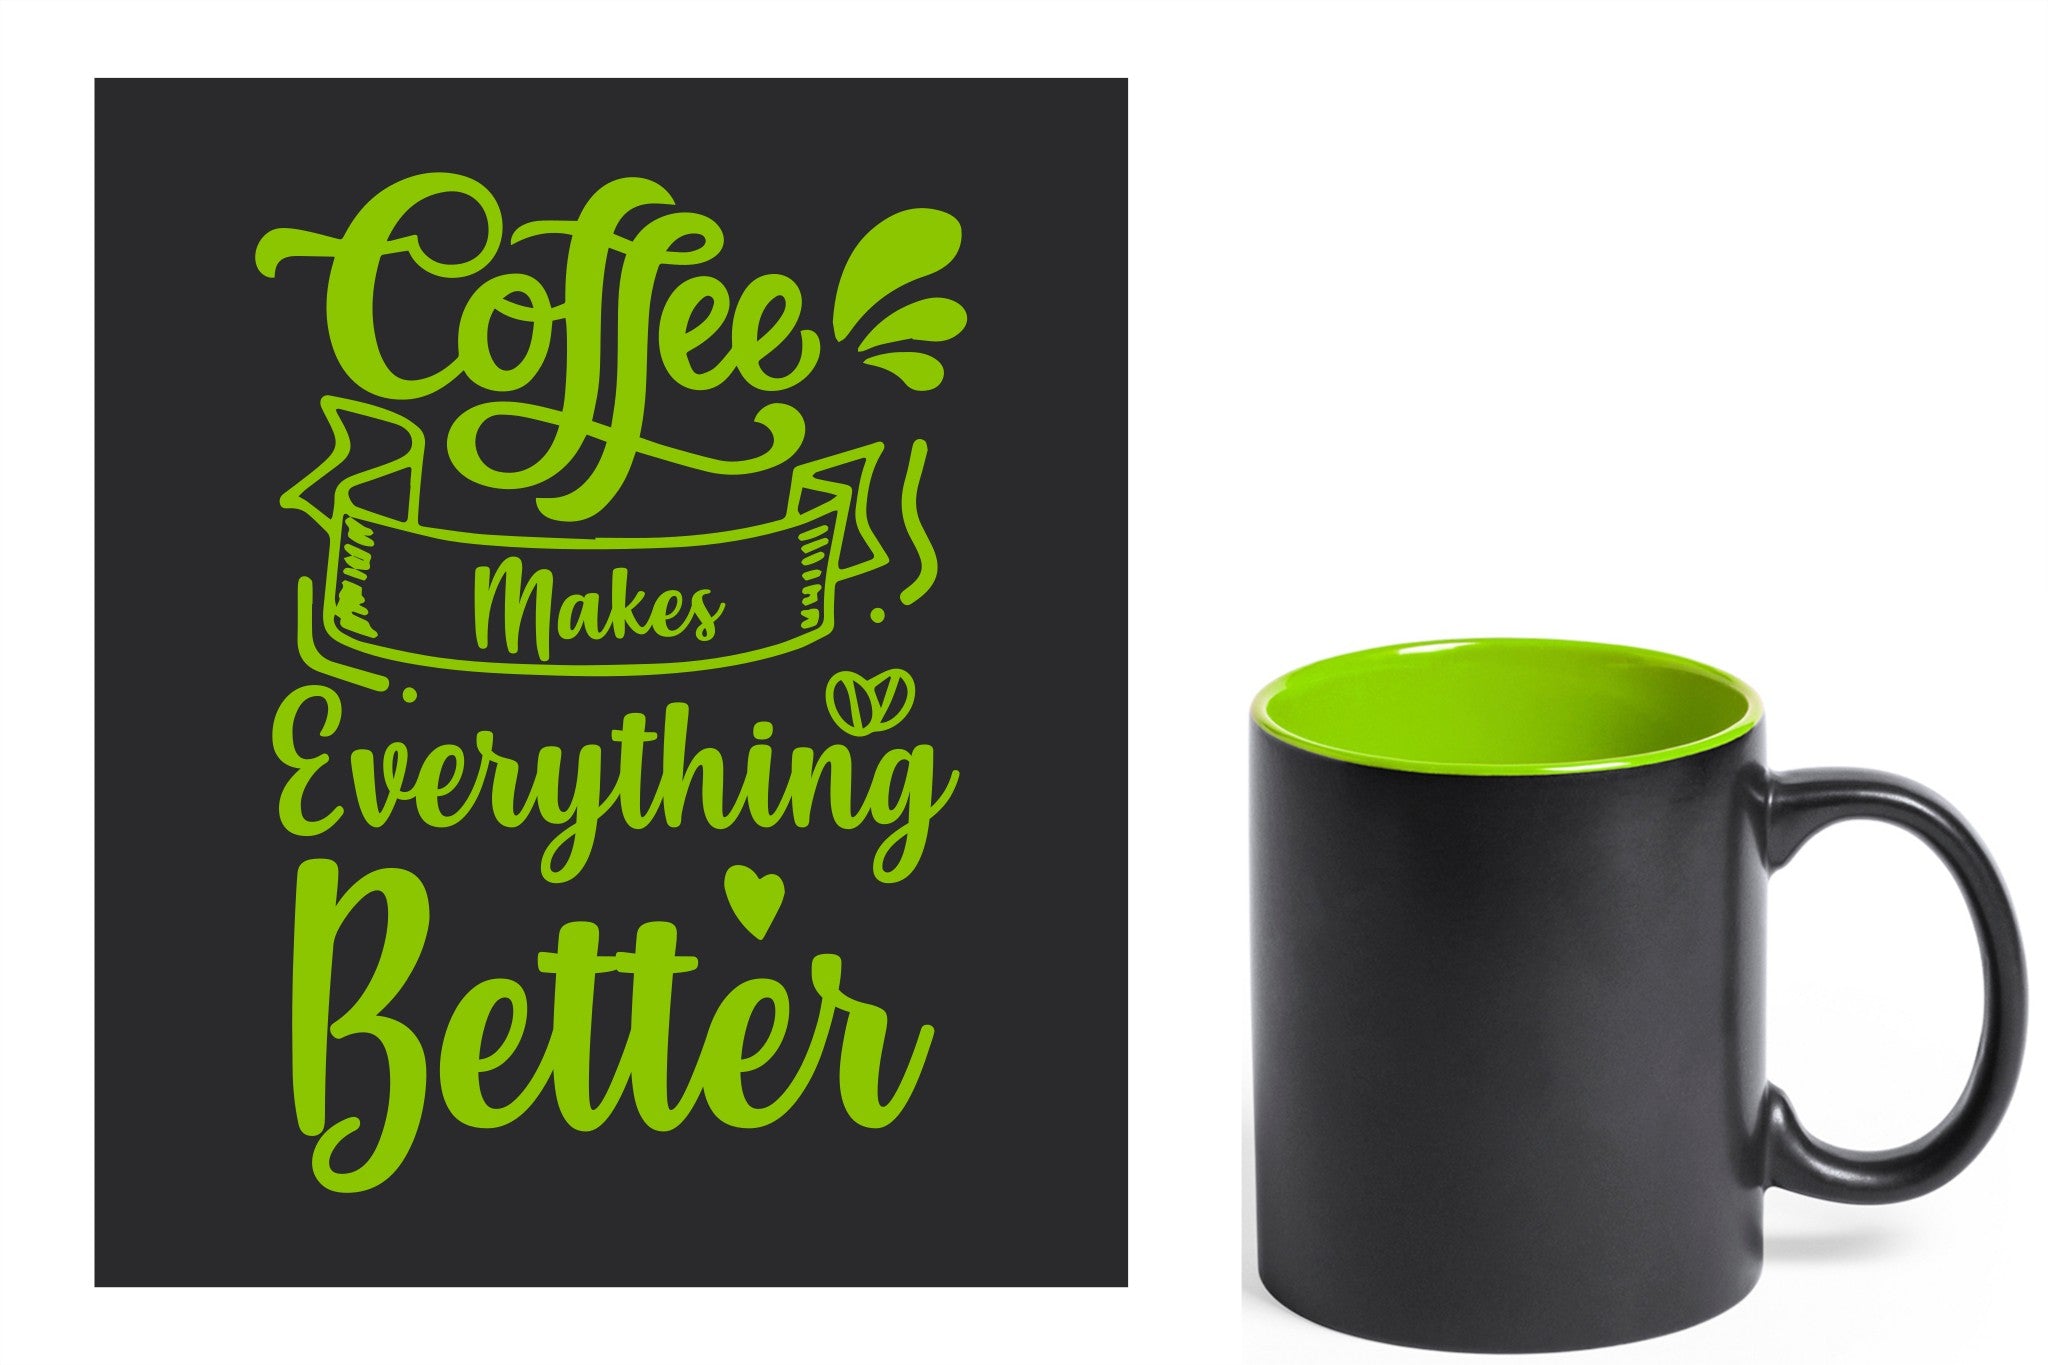 zwarte keramische mok met groene gravure  'Coffee makes everything better'.